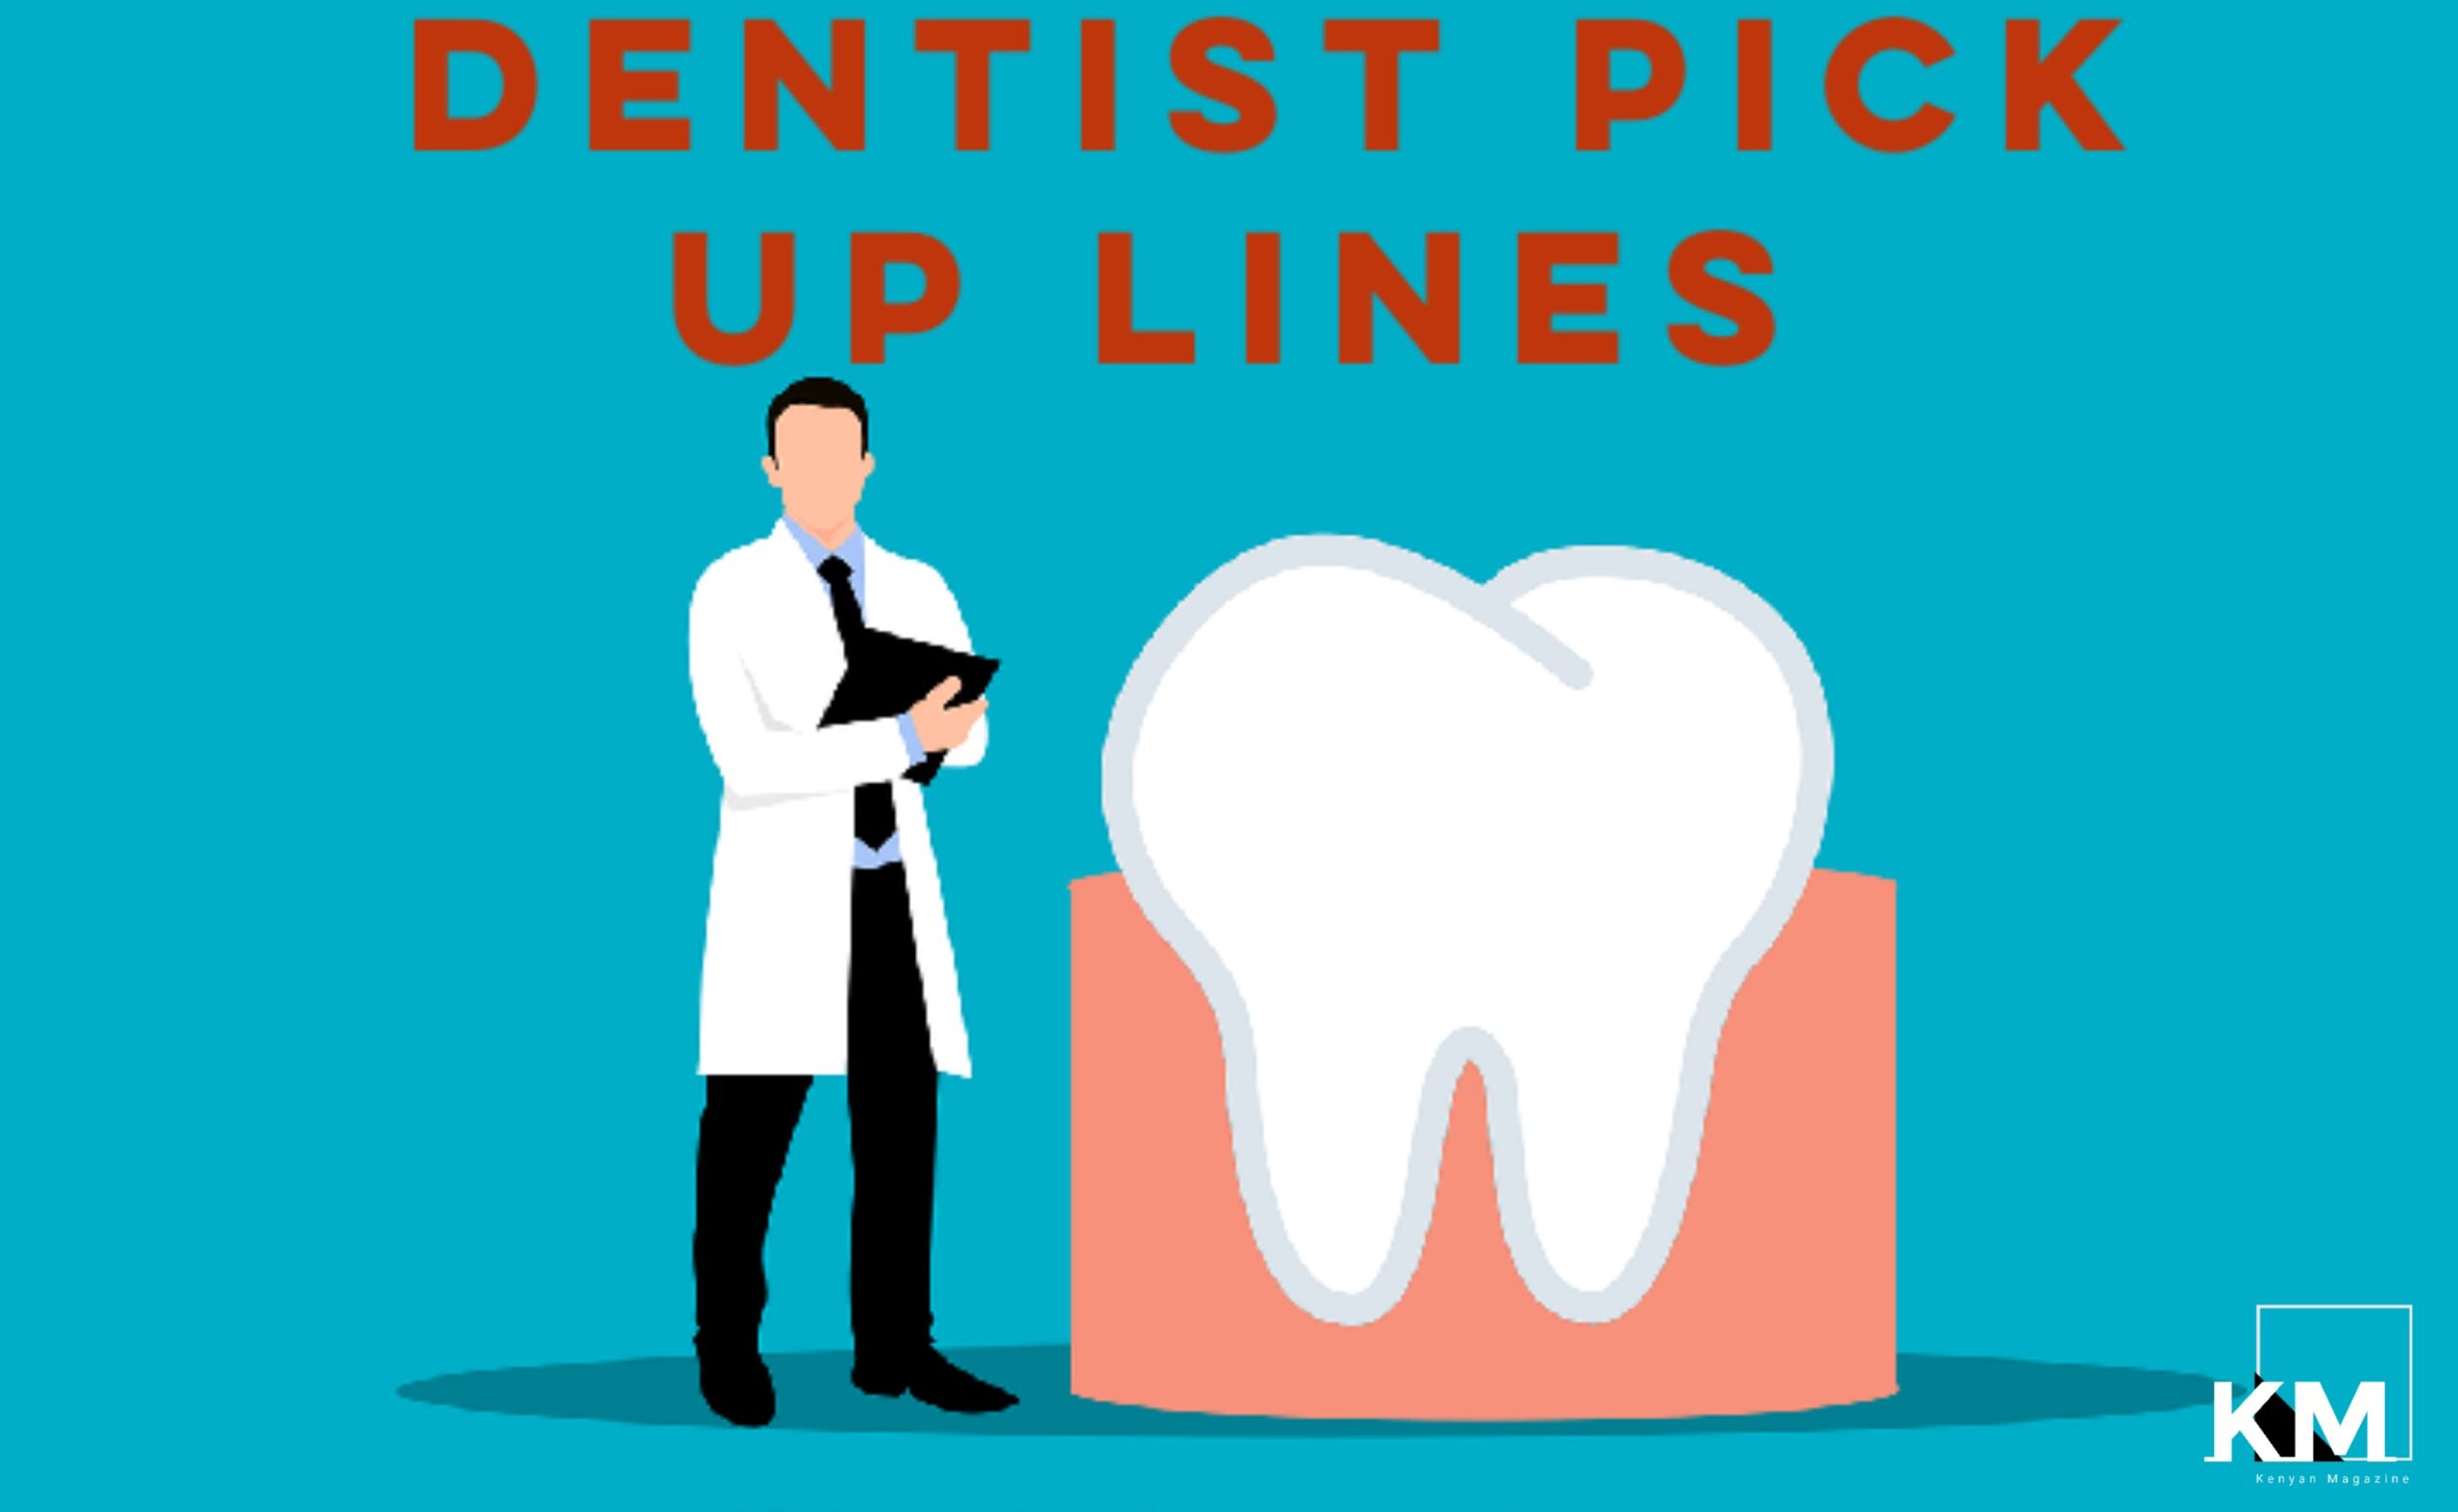 Dentist pick up lines